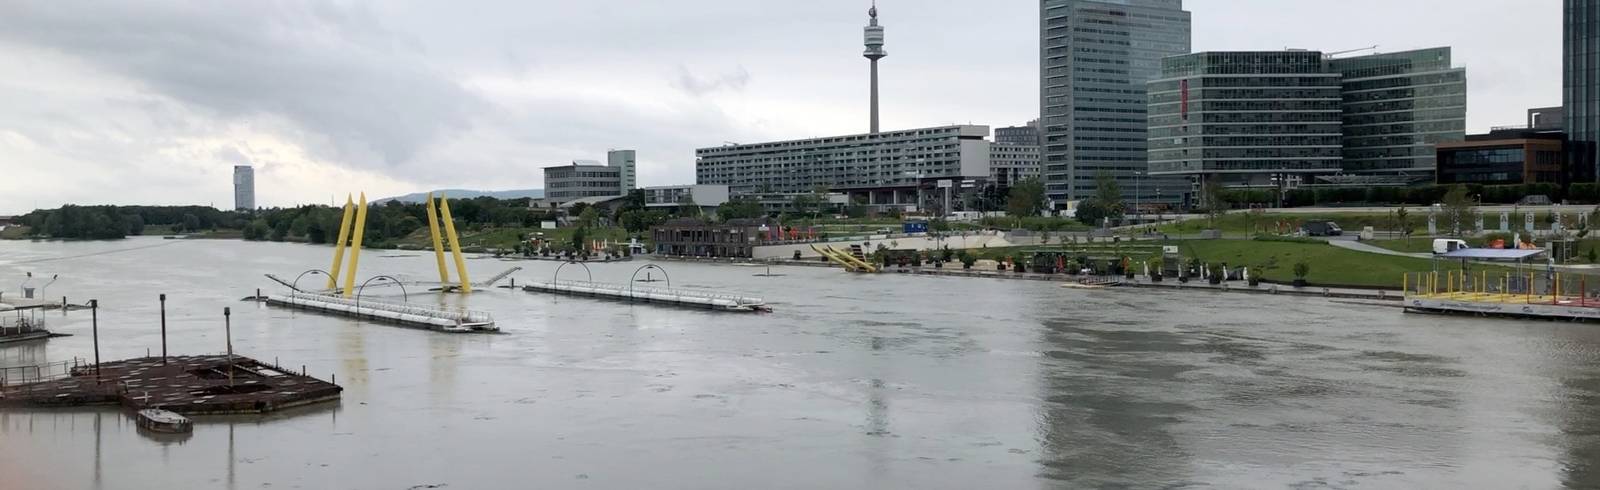 Bezirksflash: Badeverbot Neue Donau